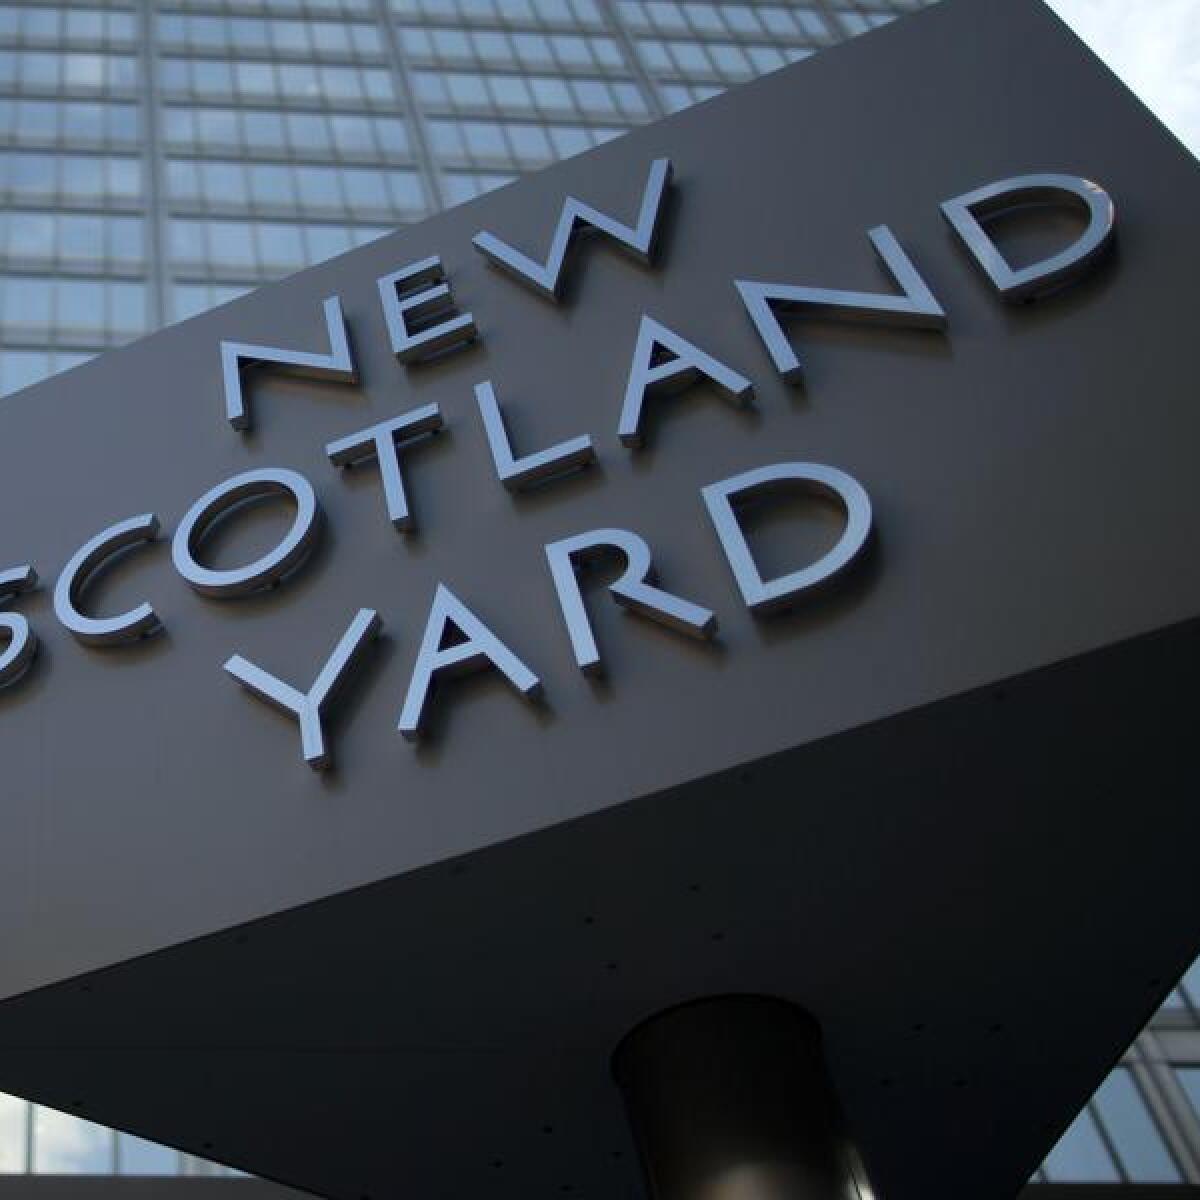 Britain Scotland Yard